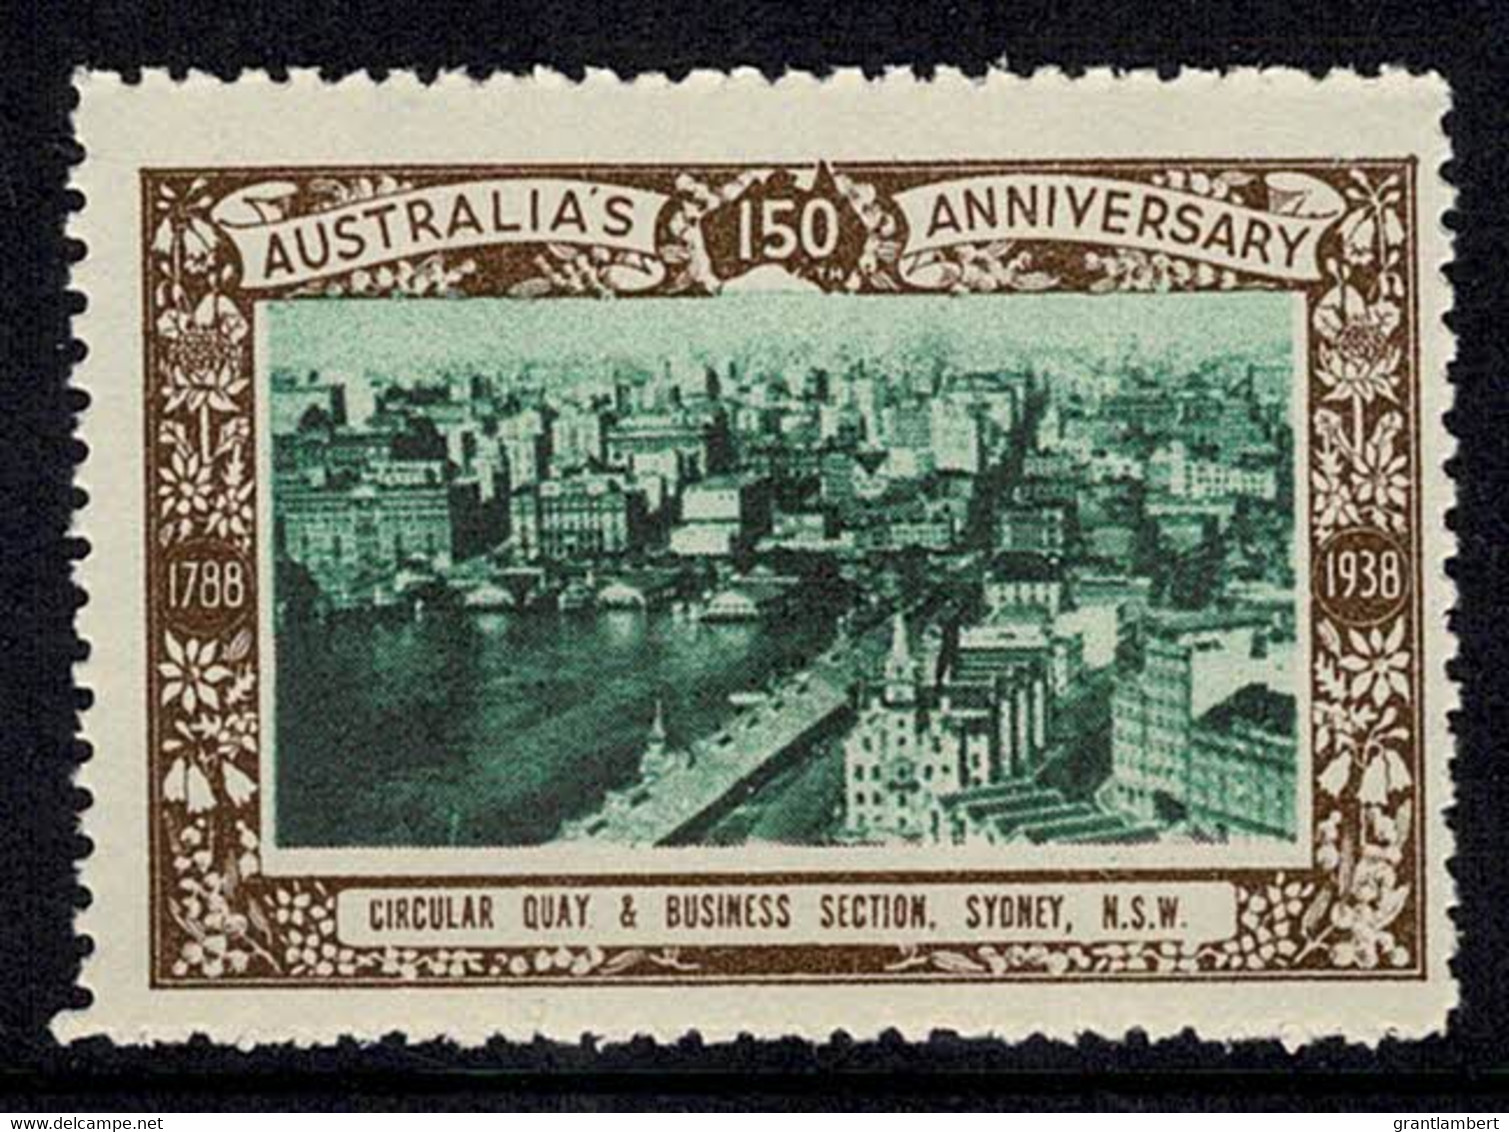 Australia 1938 Circular Quay & Business Section, Sydney - NSW 150th Anniversary Cinderella MNH - Cinderella